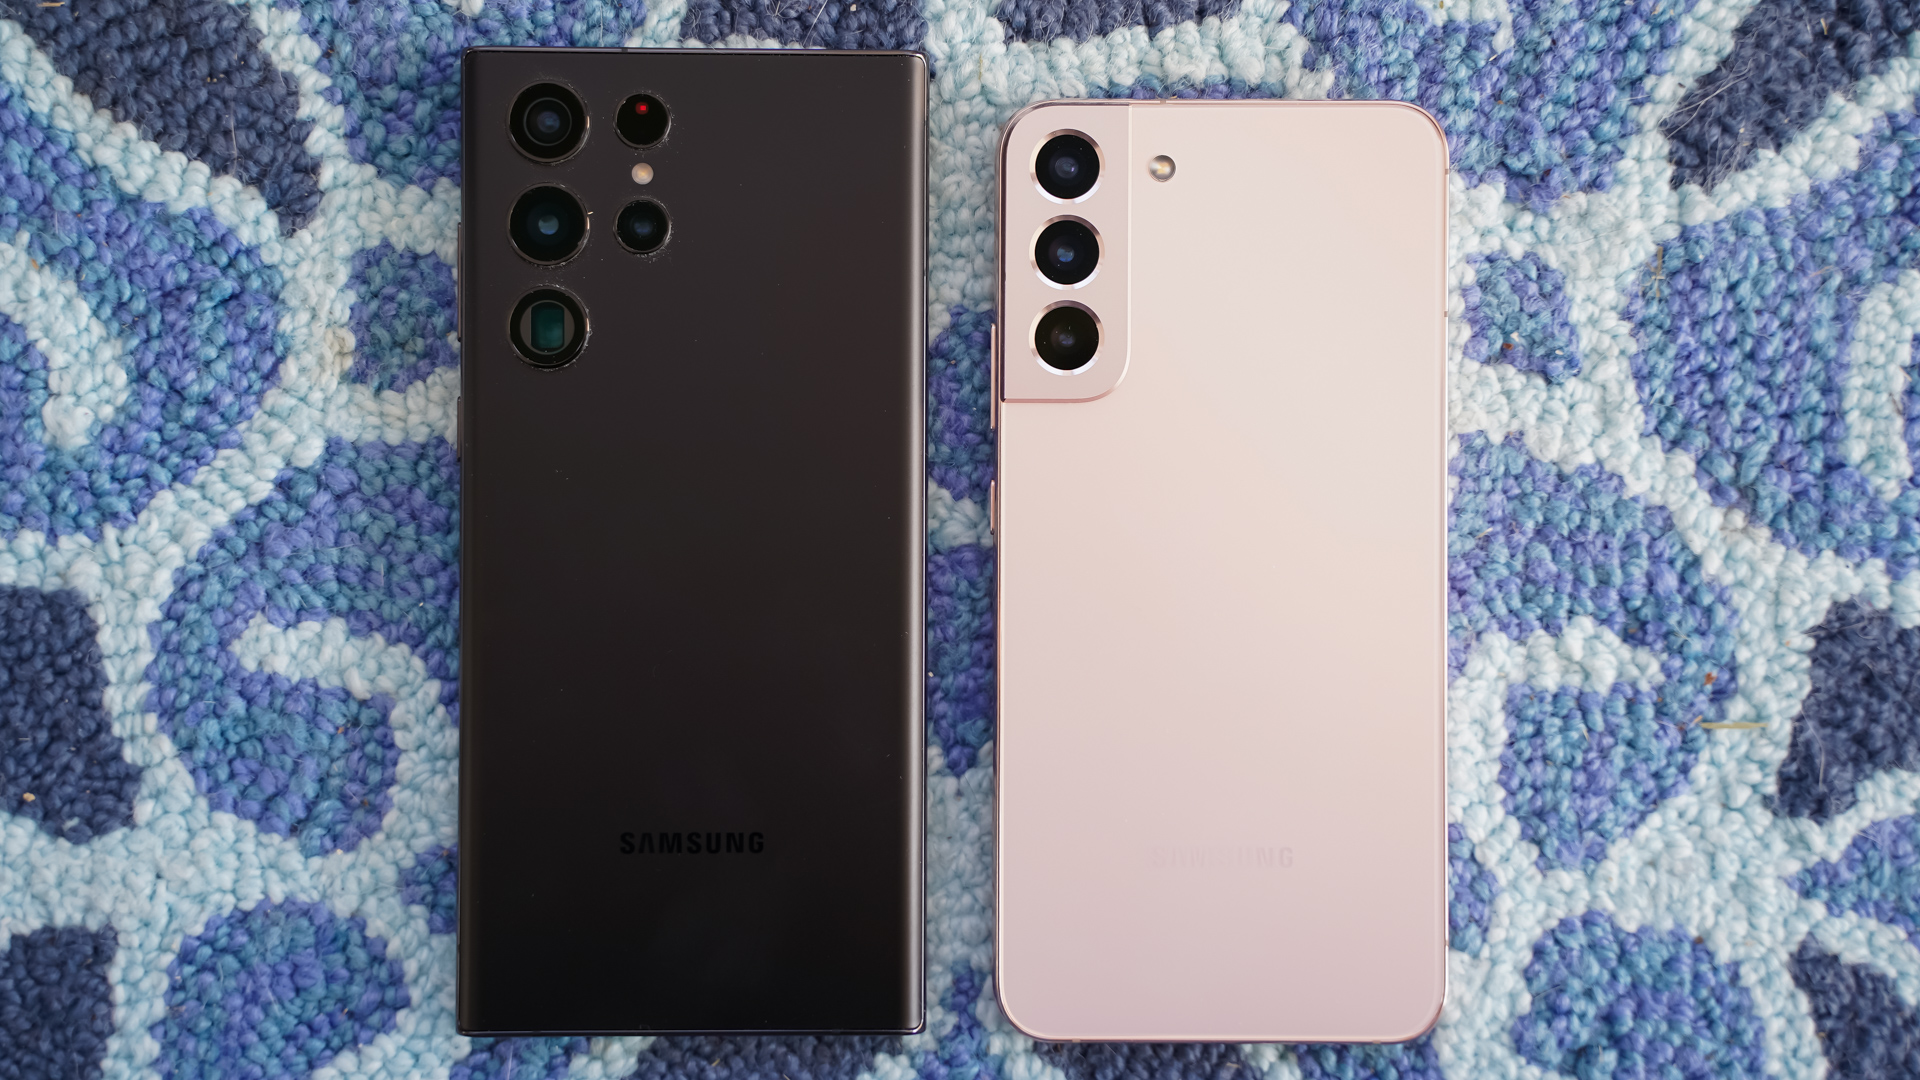 Samsung Galaxy S22 Ultra black vs Samsung Galasy S22 Plus pink rear on carpet